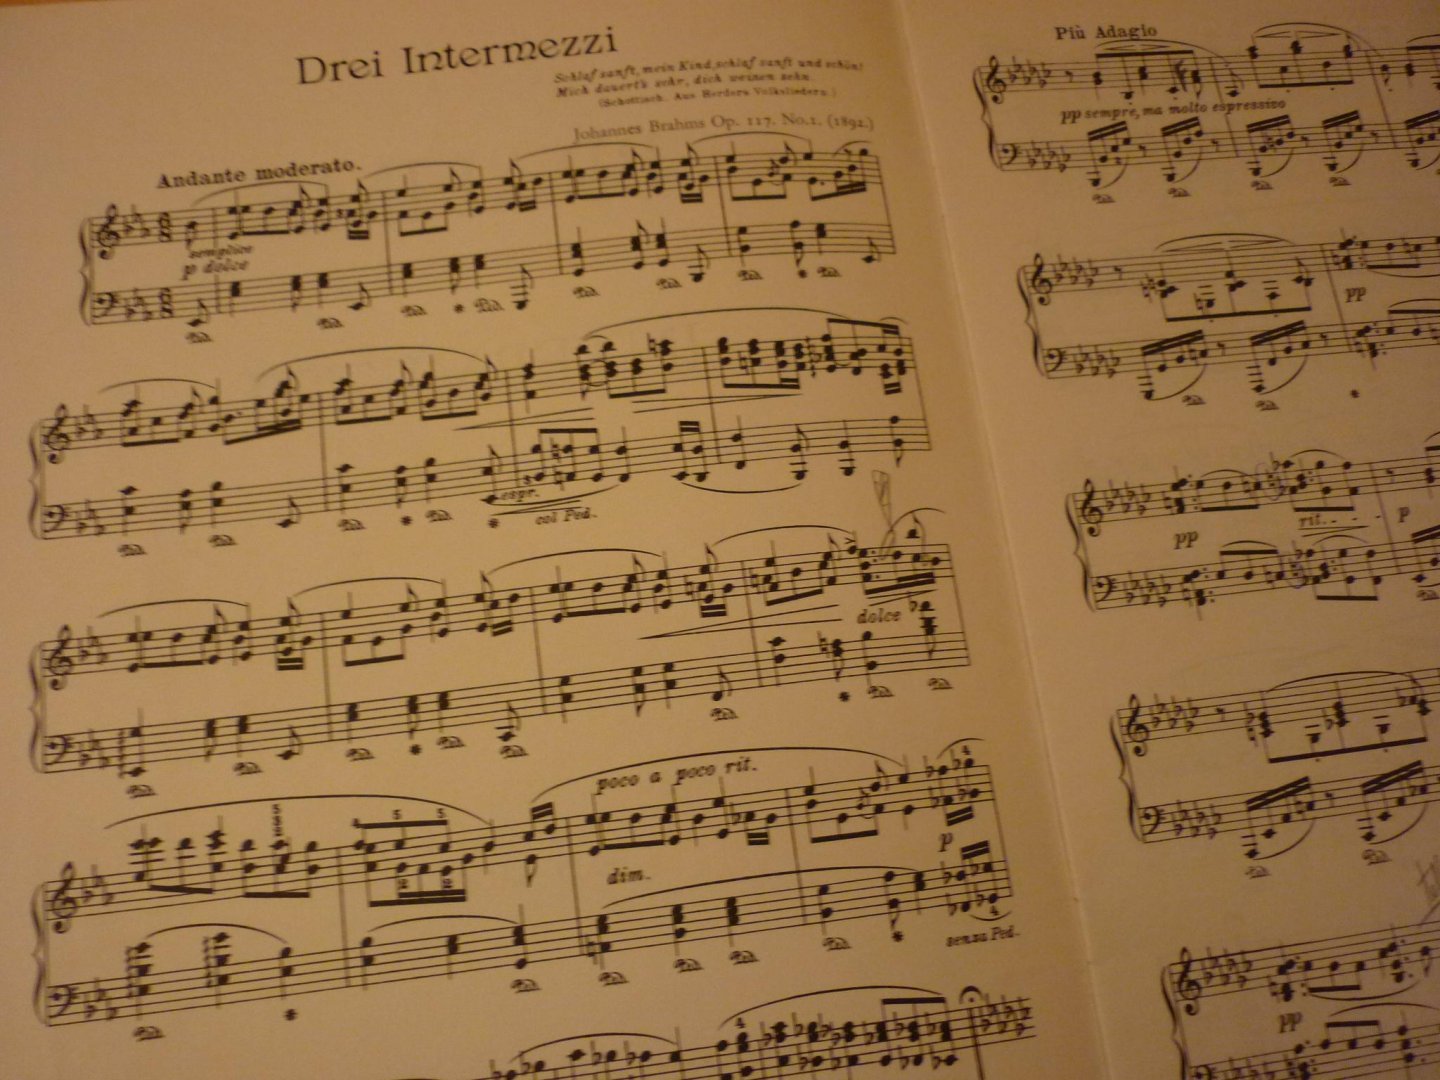 Brahms; Johannes (1833 – 1897) - Intermezzi; opus 117 - piano solo (edited by Emil Sauer)